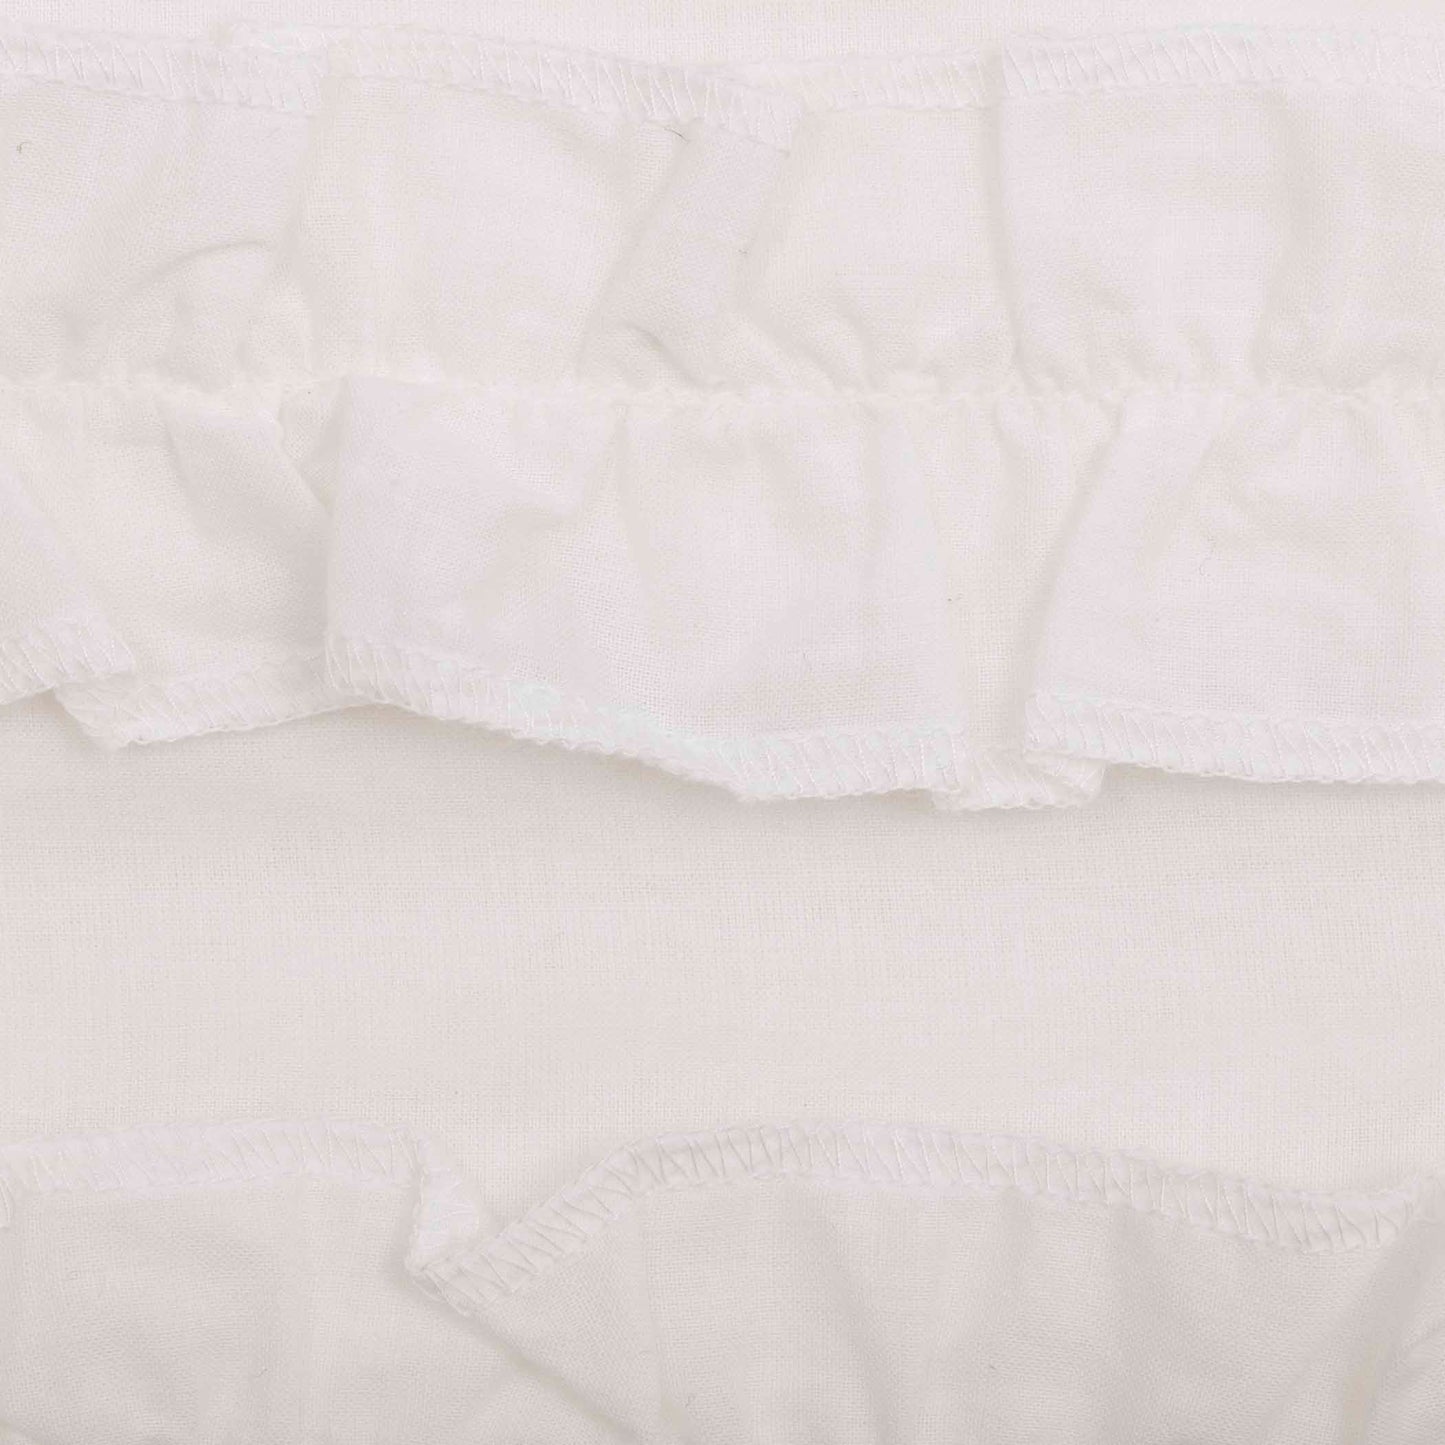 52001-White-Ruffled-Sheer-Petticoat-Valance-16x72-image-8